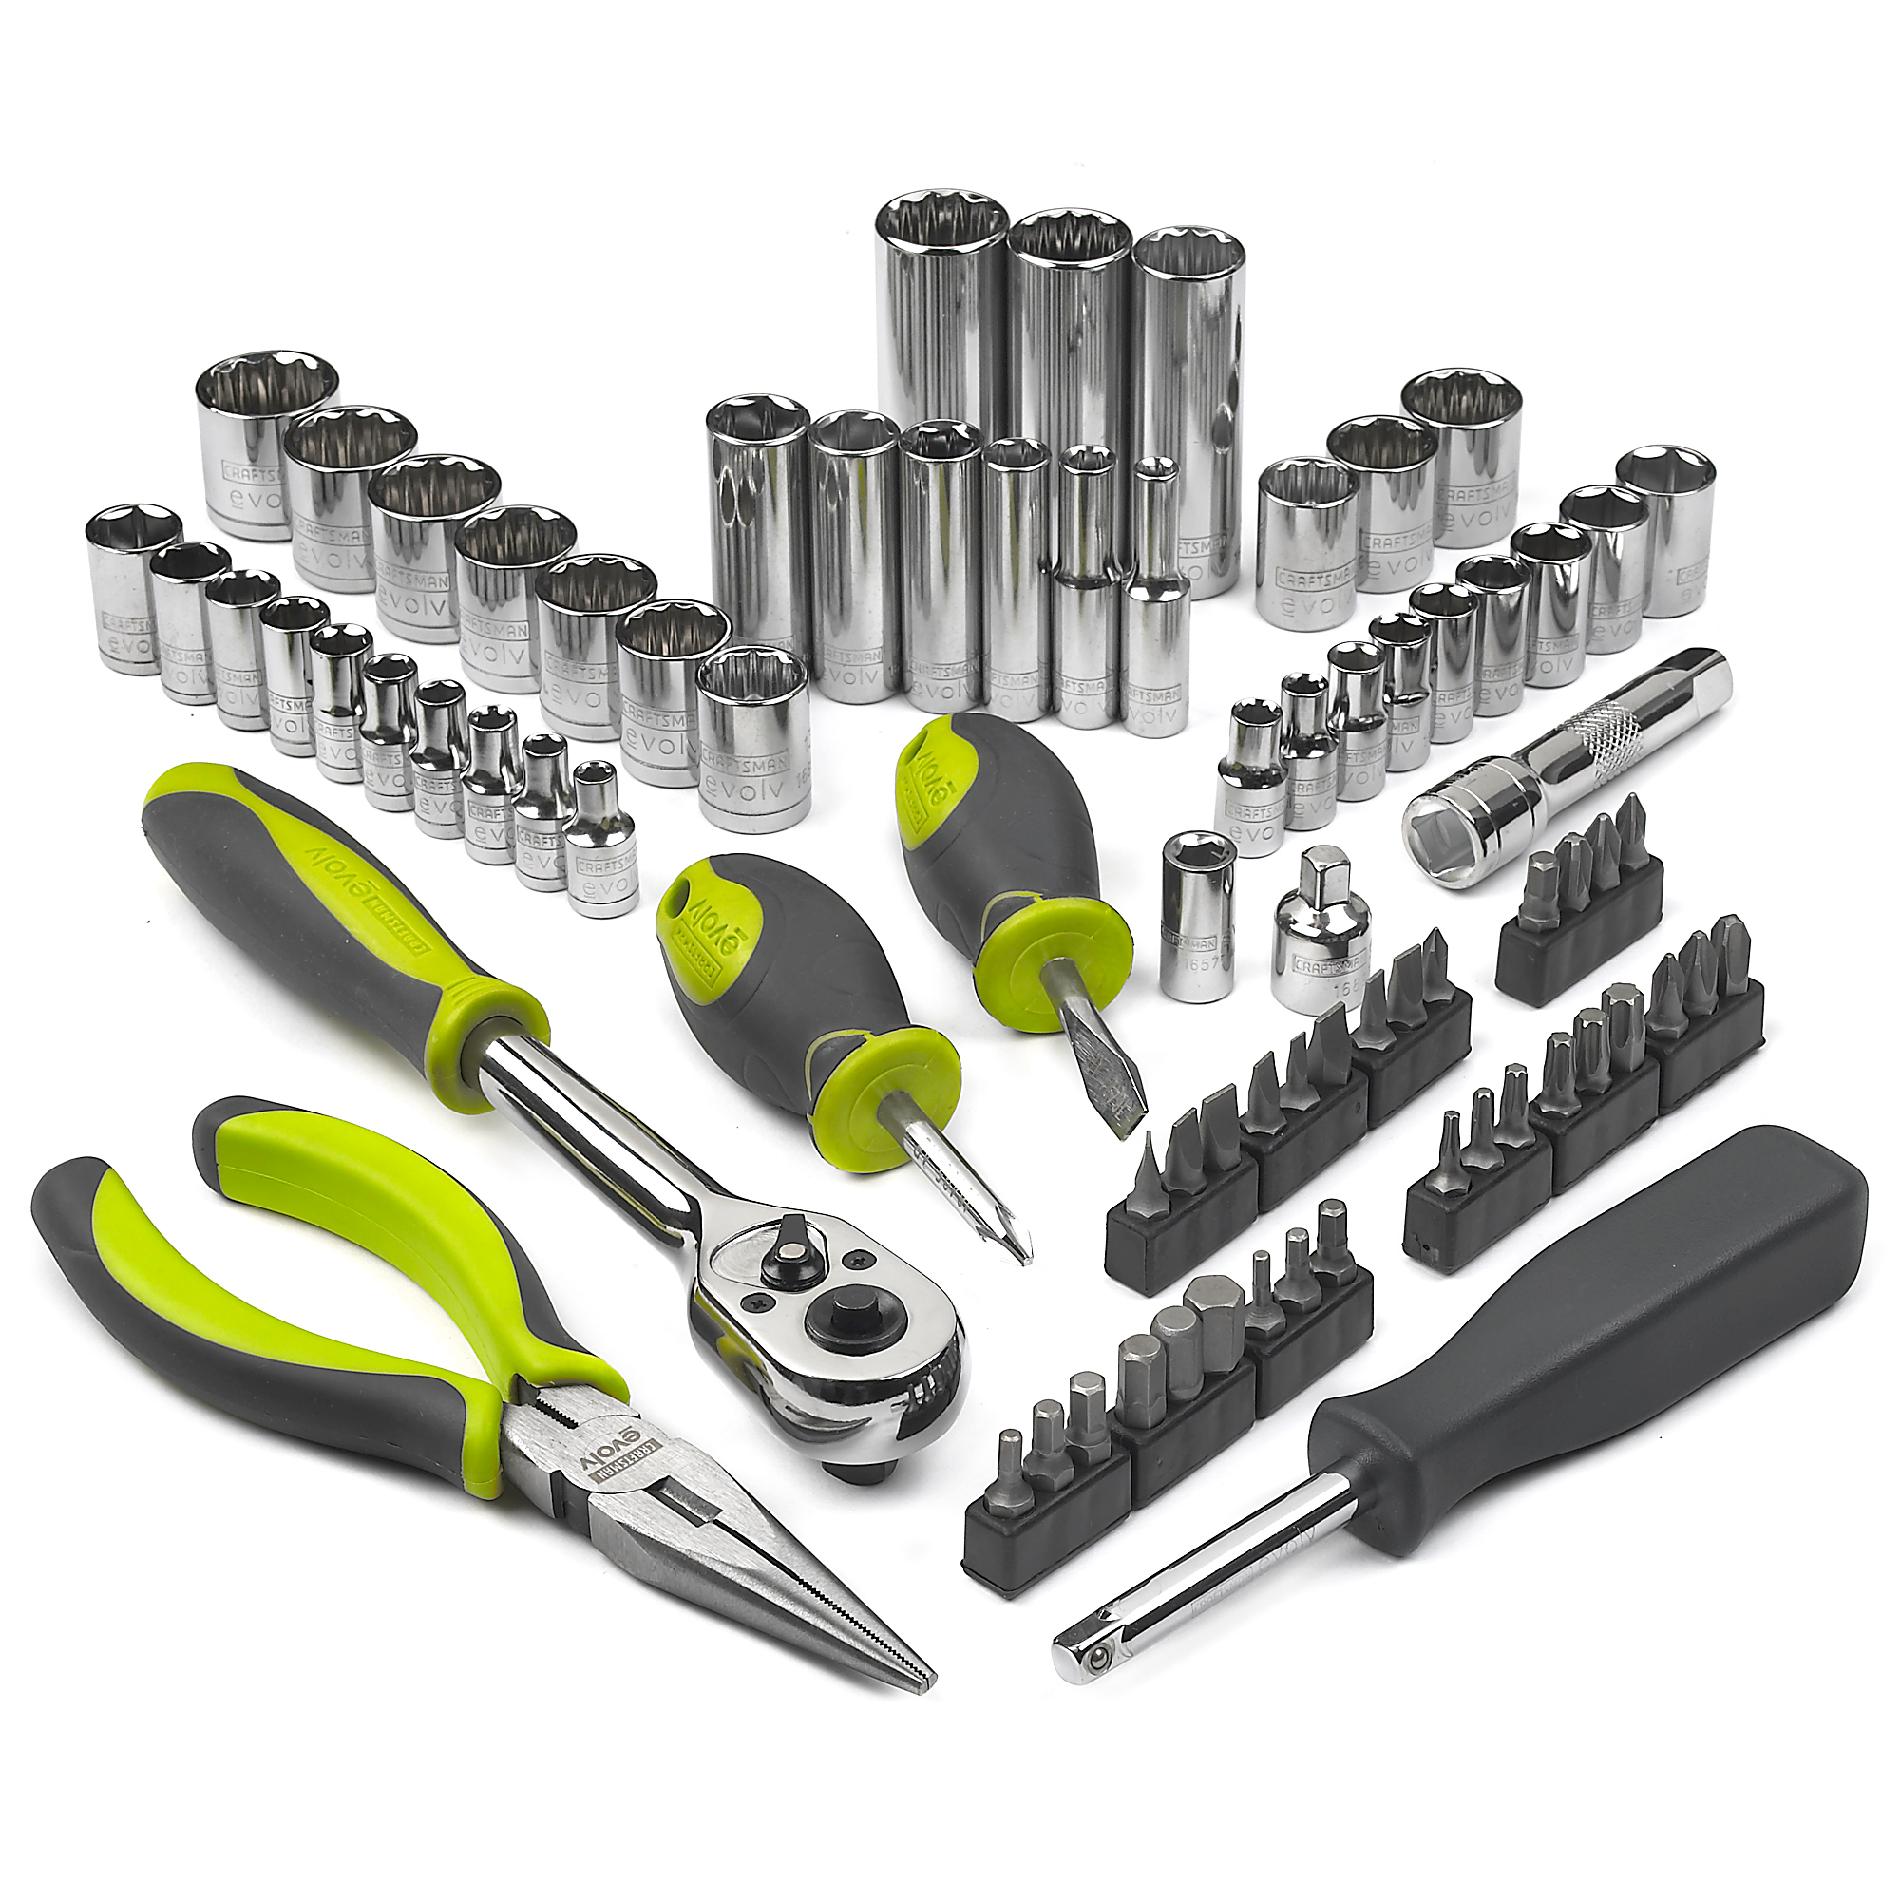 Craftsman Evolv 77 pc. Mechanics Tool Set